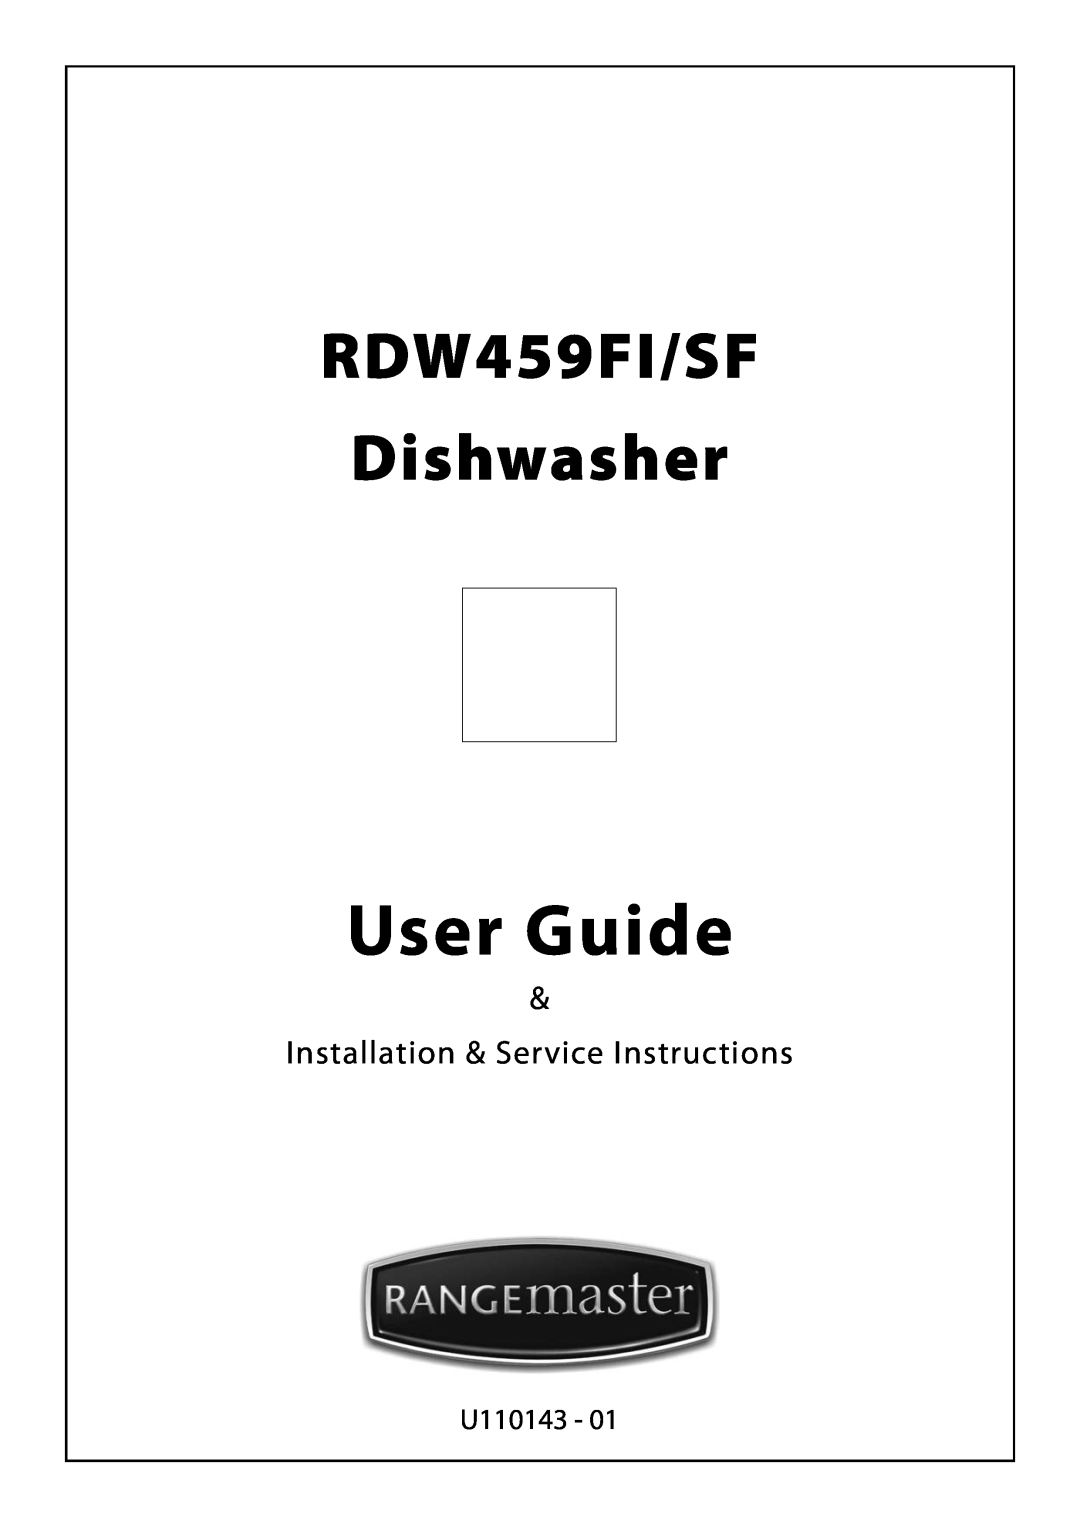 Rangemaster manual User Guide, RDW459FI/SF Dishwasher, Installation & Service Instructions, U110143 